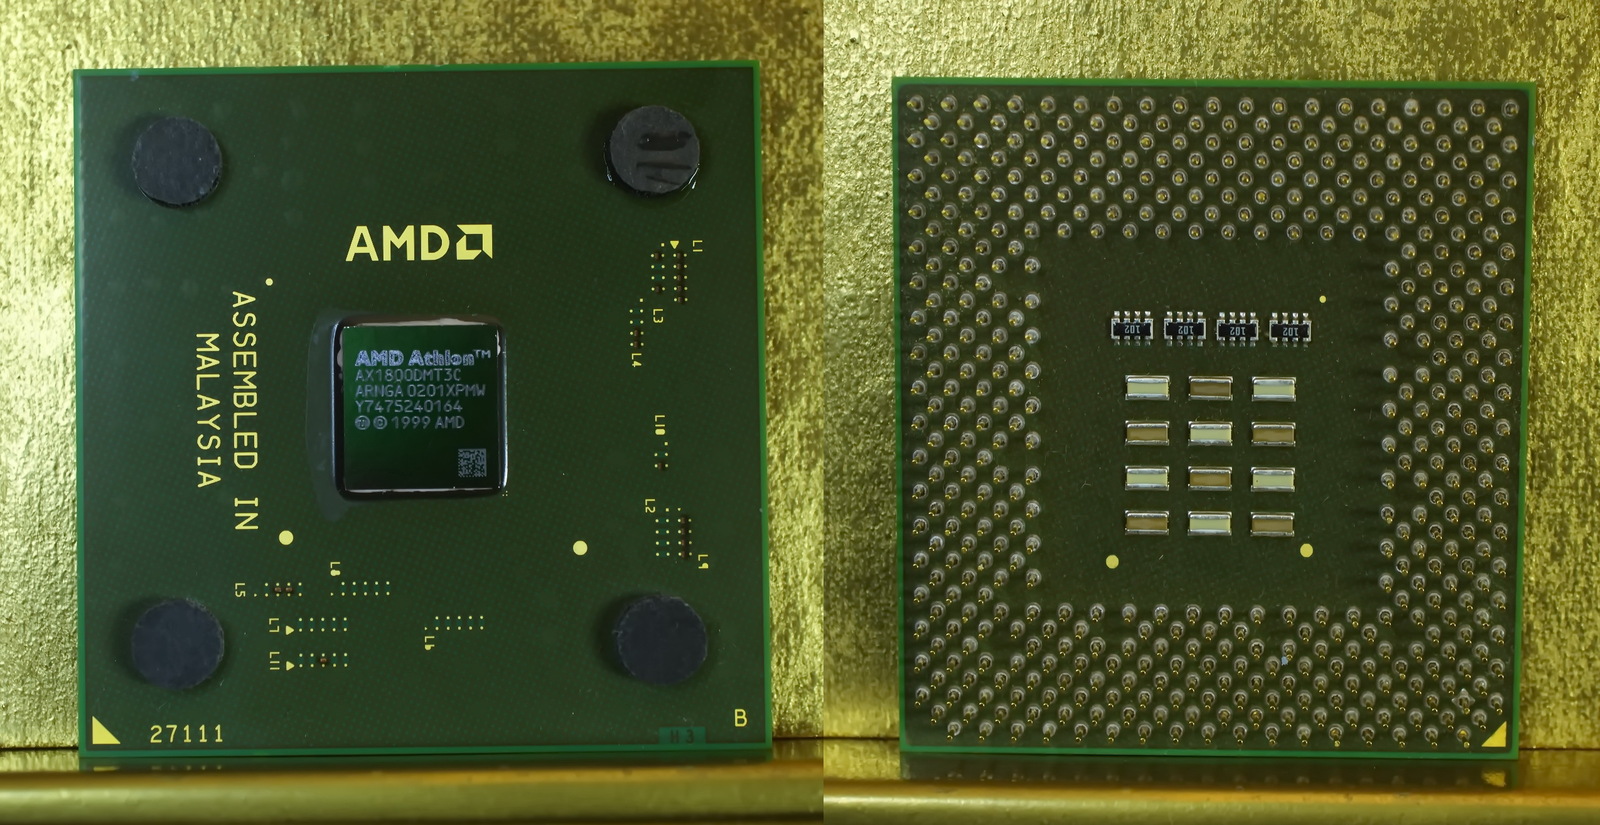 AMD Athlon XP 1800 266MHz 256KB Socket A CPU